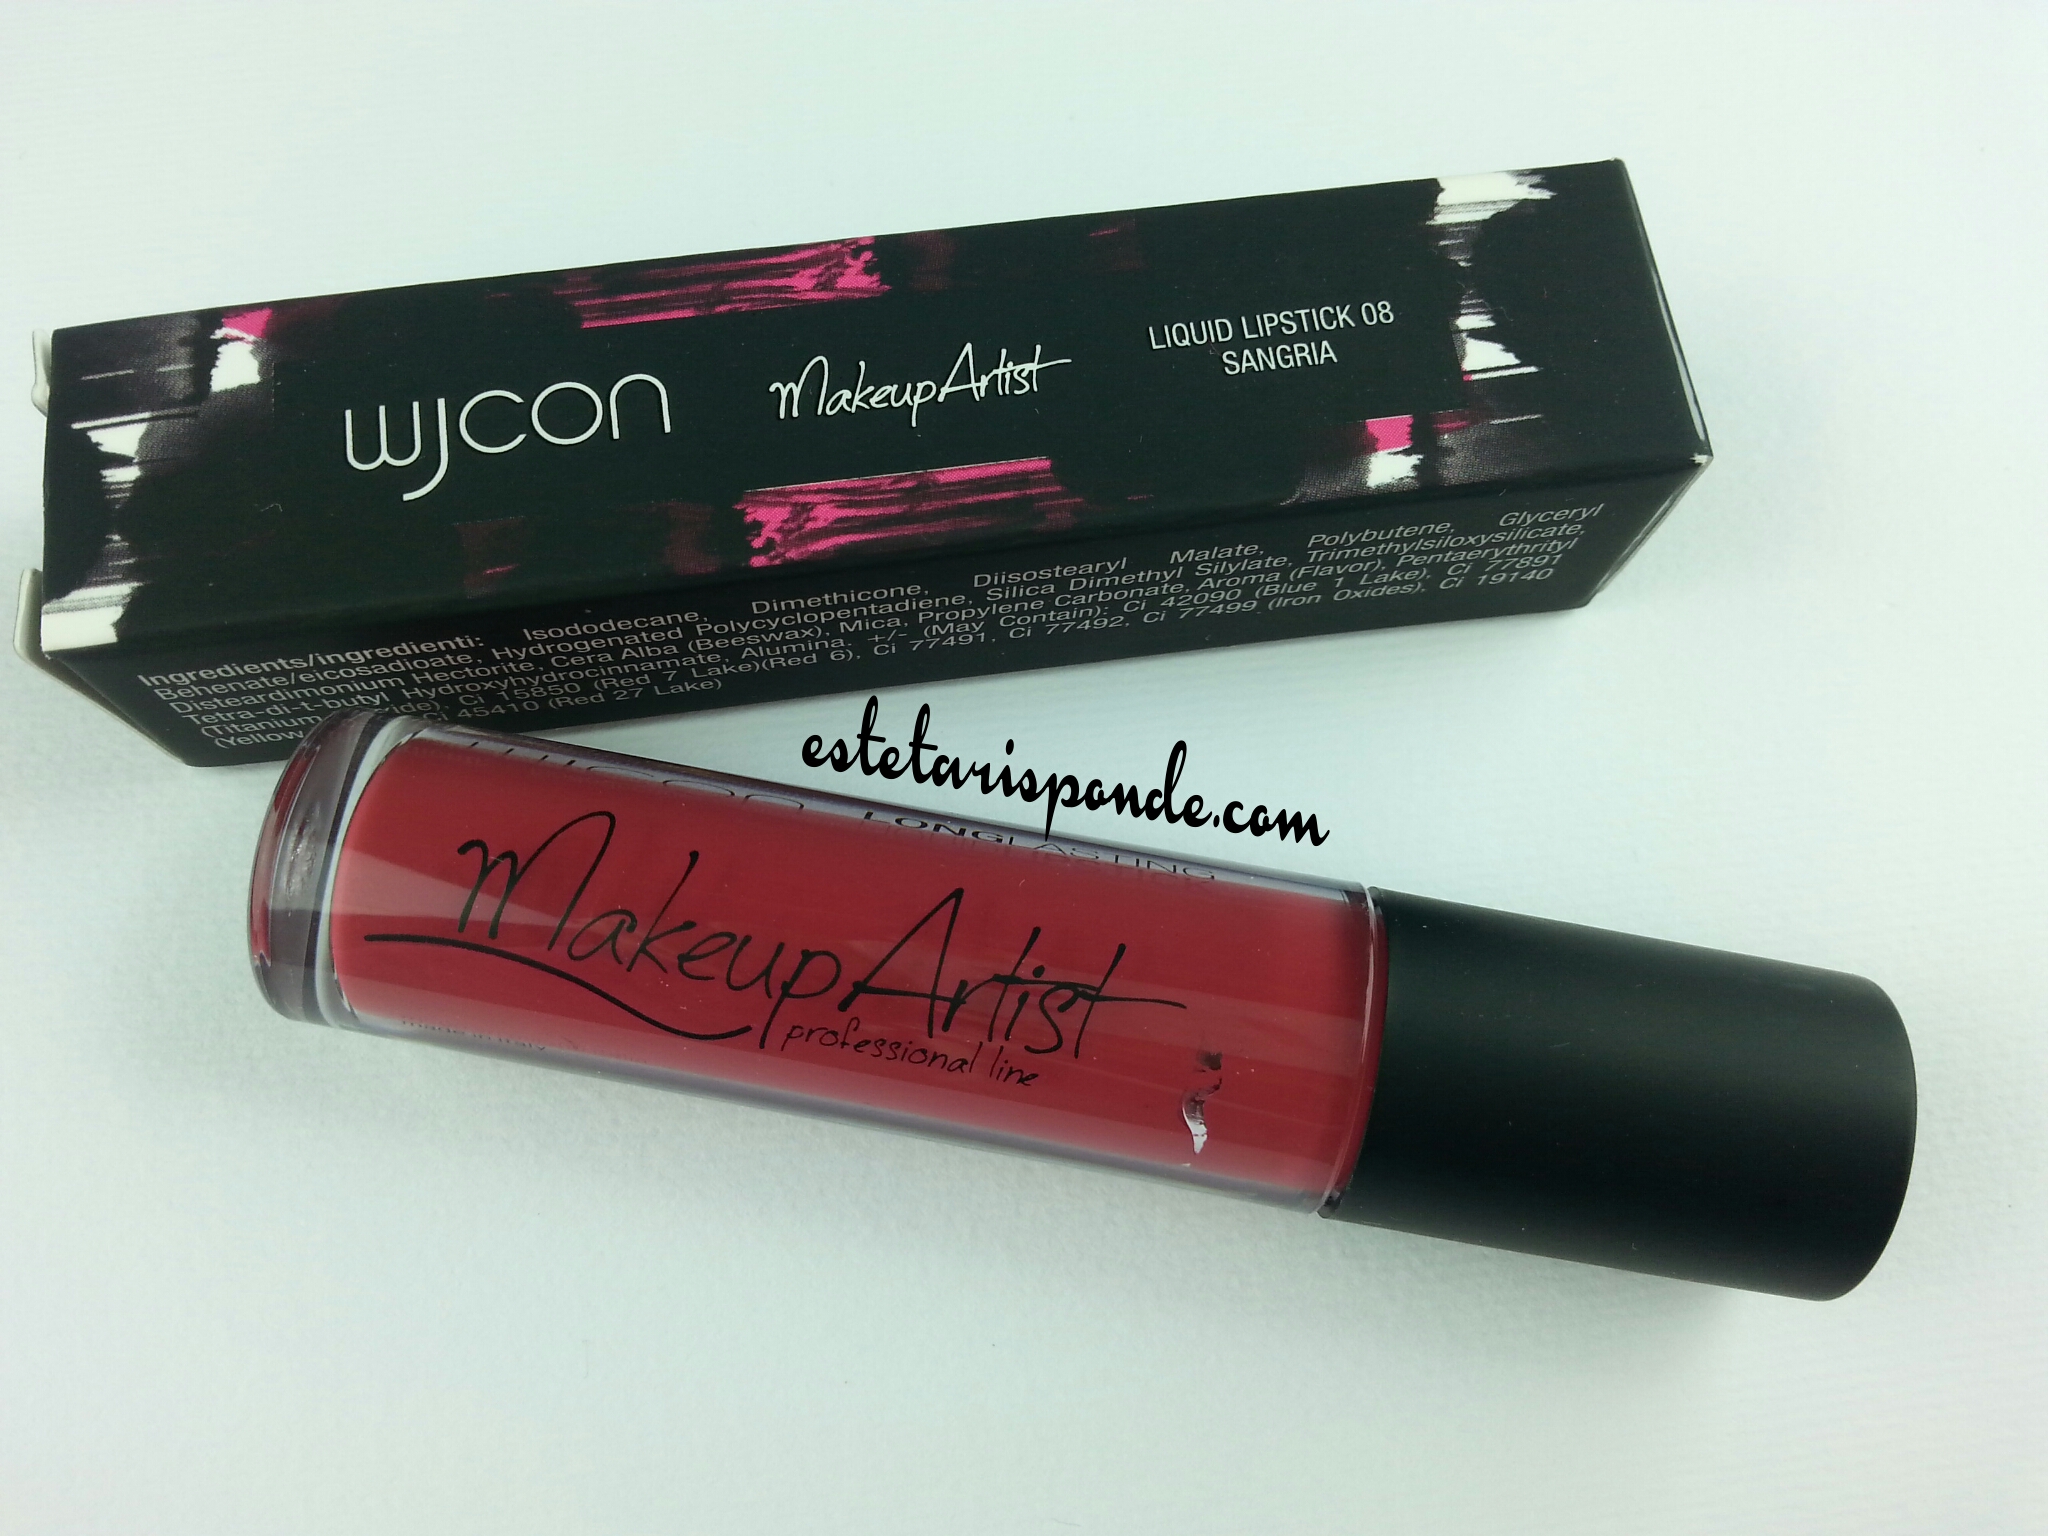 Wjcon Makeup Artist collection - MakeUp Artist Long Lasting Liquid Lipstick